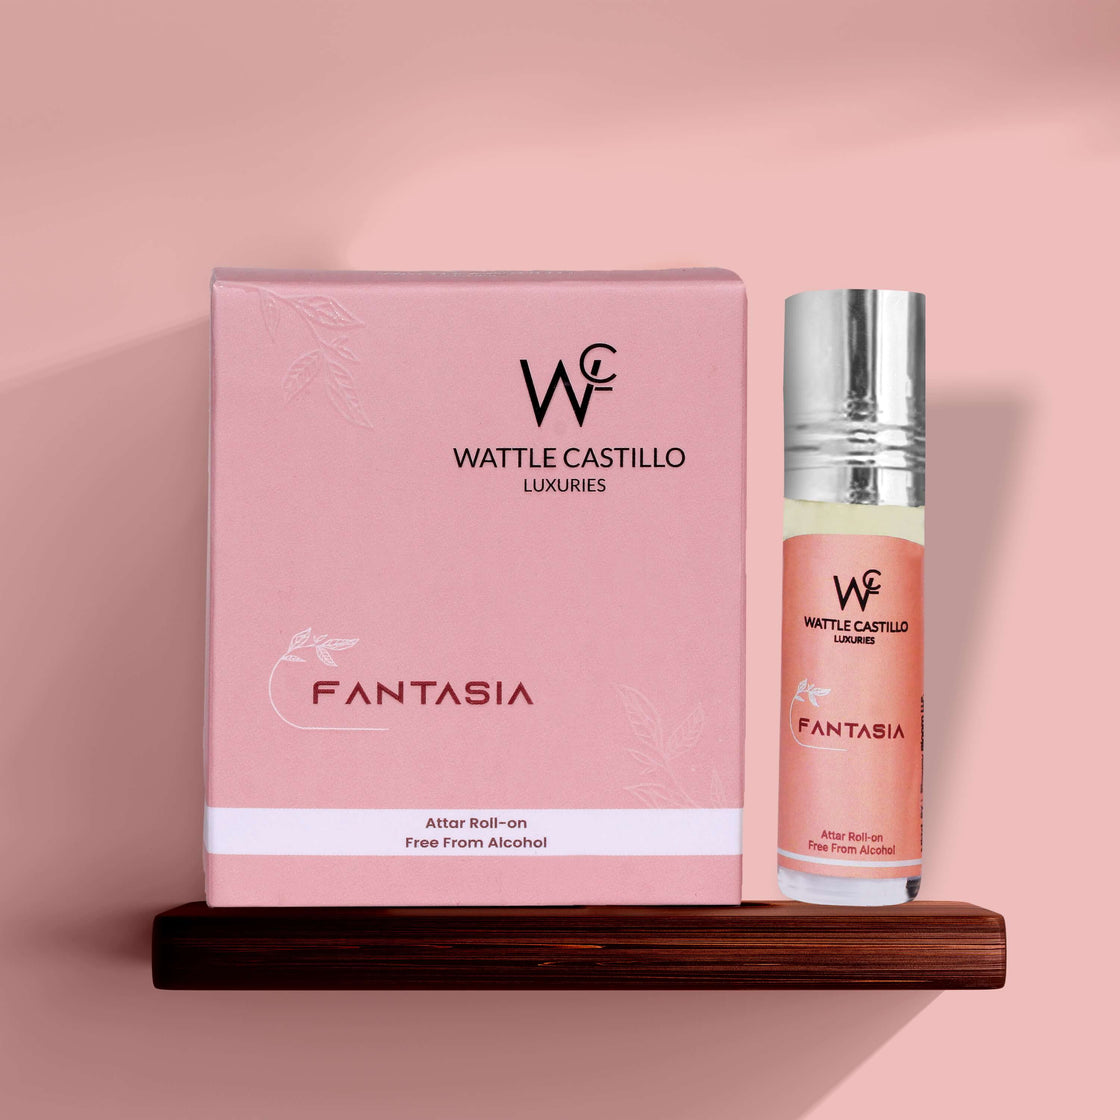 Wattle Castillo Fantasia Premium Luxury 100% Non Alcoholic Long Lasting Roll On Attar Perfume For Unisex 6 ML - Wattle Castillo